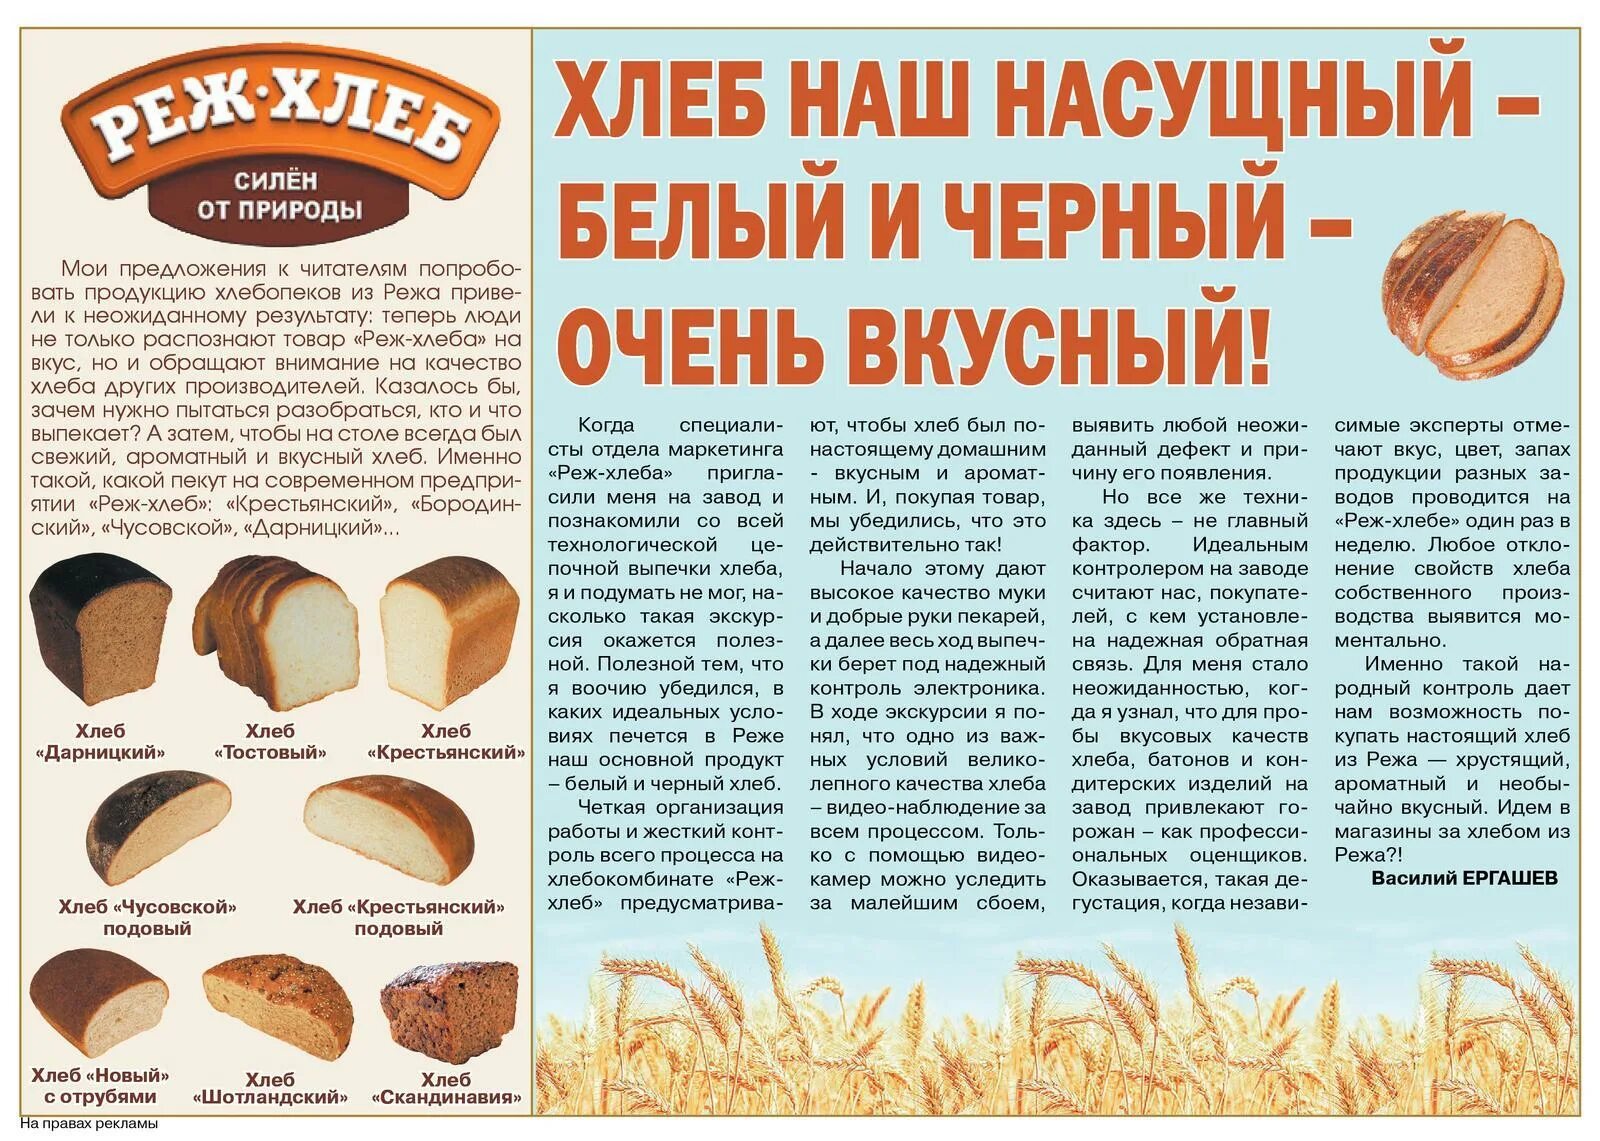 Реклама хлеба и хлебобулочных изделий. Хлебобулочные изделия на праздник. Рекламирование хлеба и хлебобулочных изделий. Хлебобулочные изделия названия.